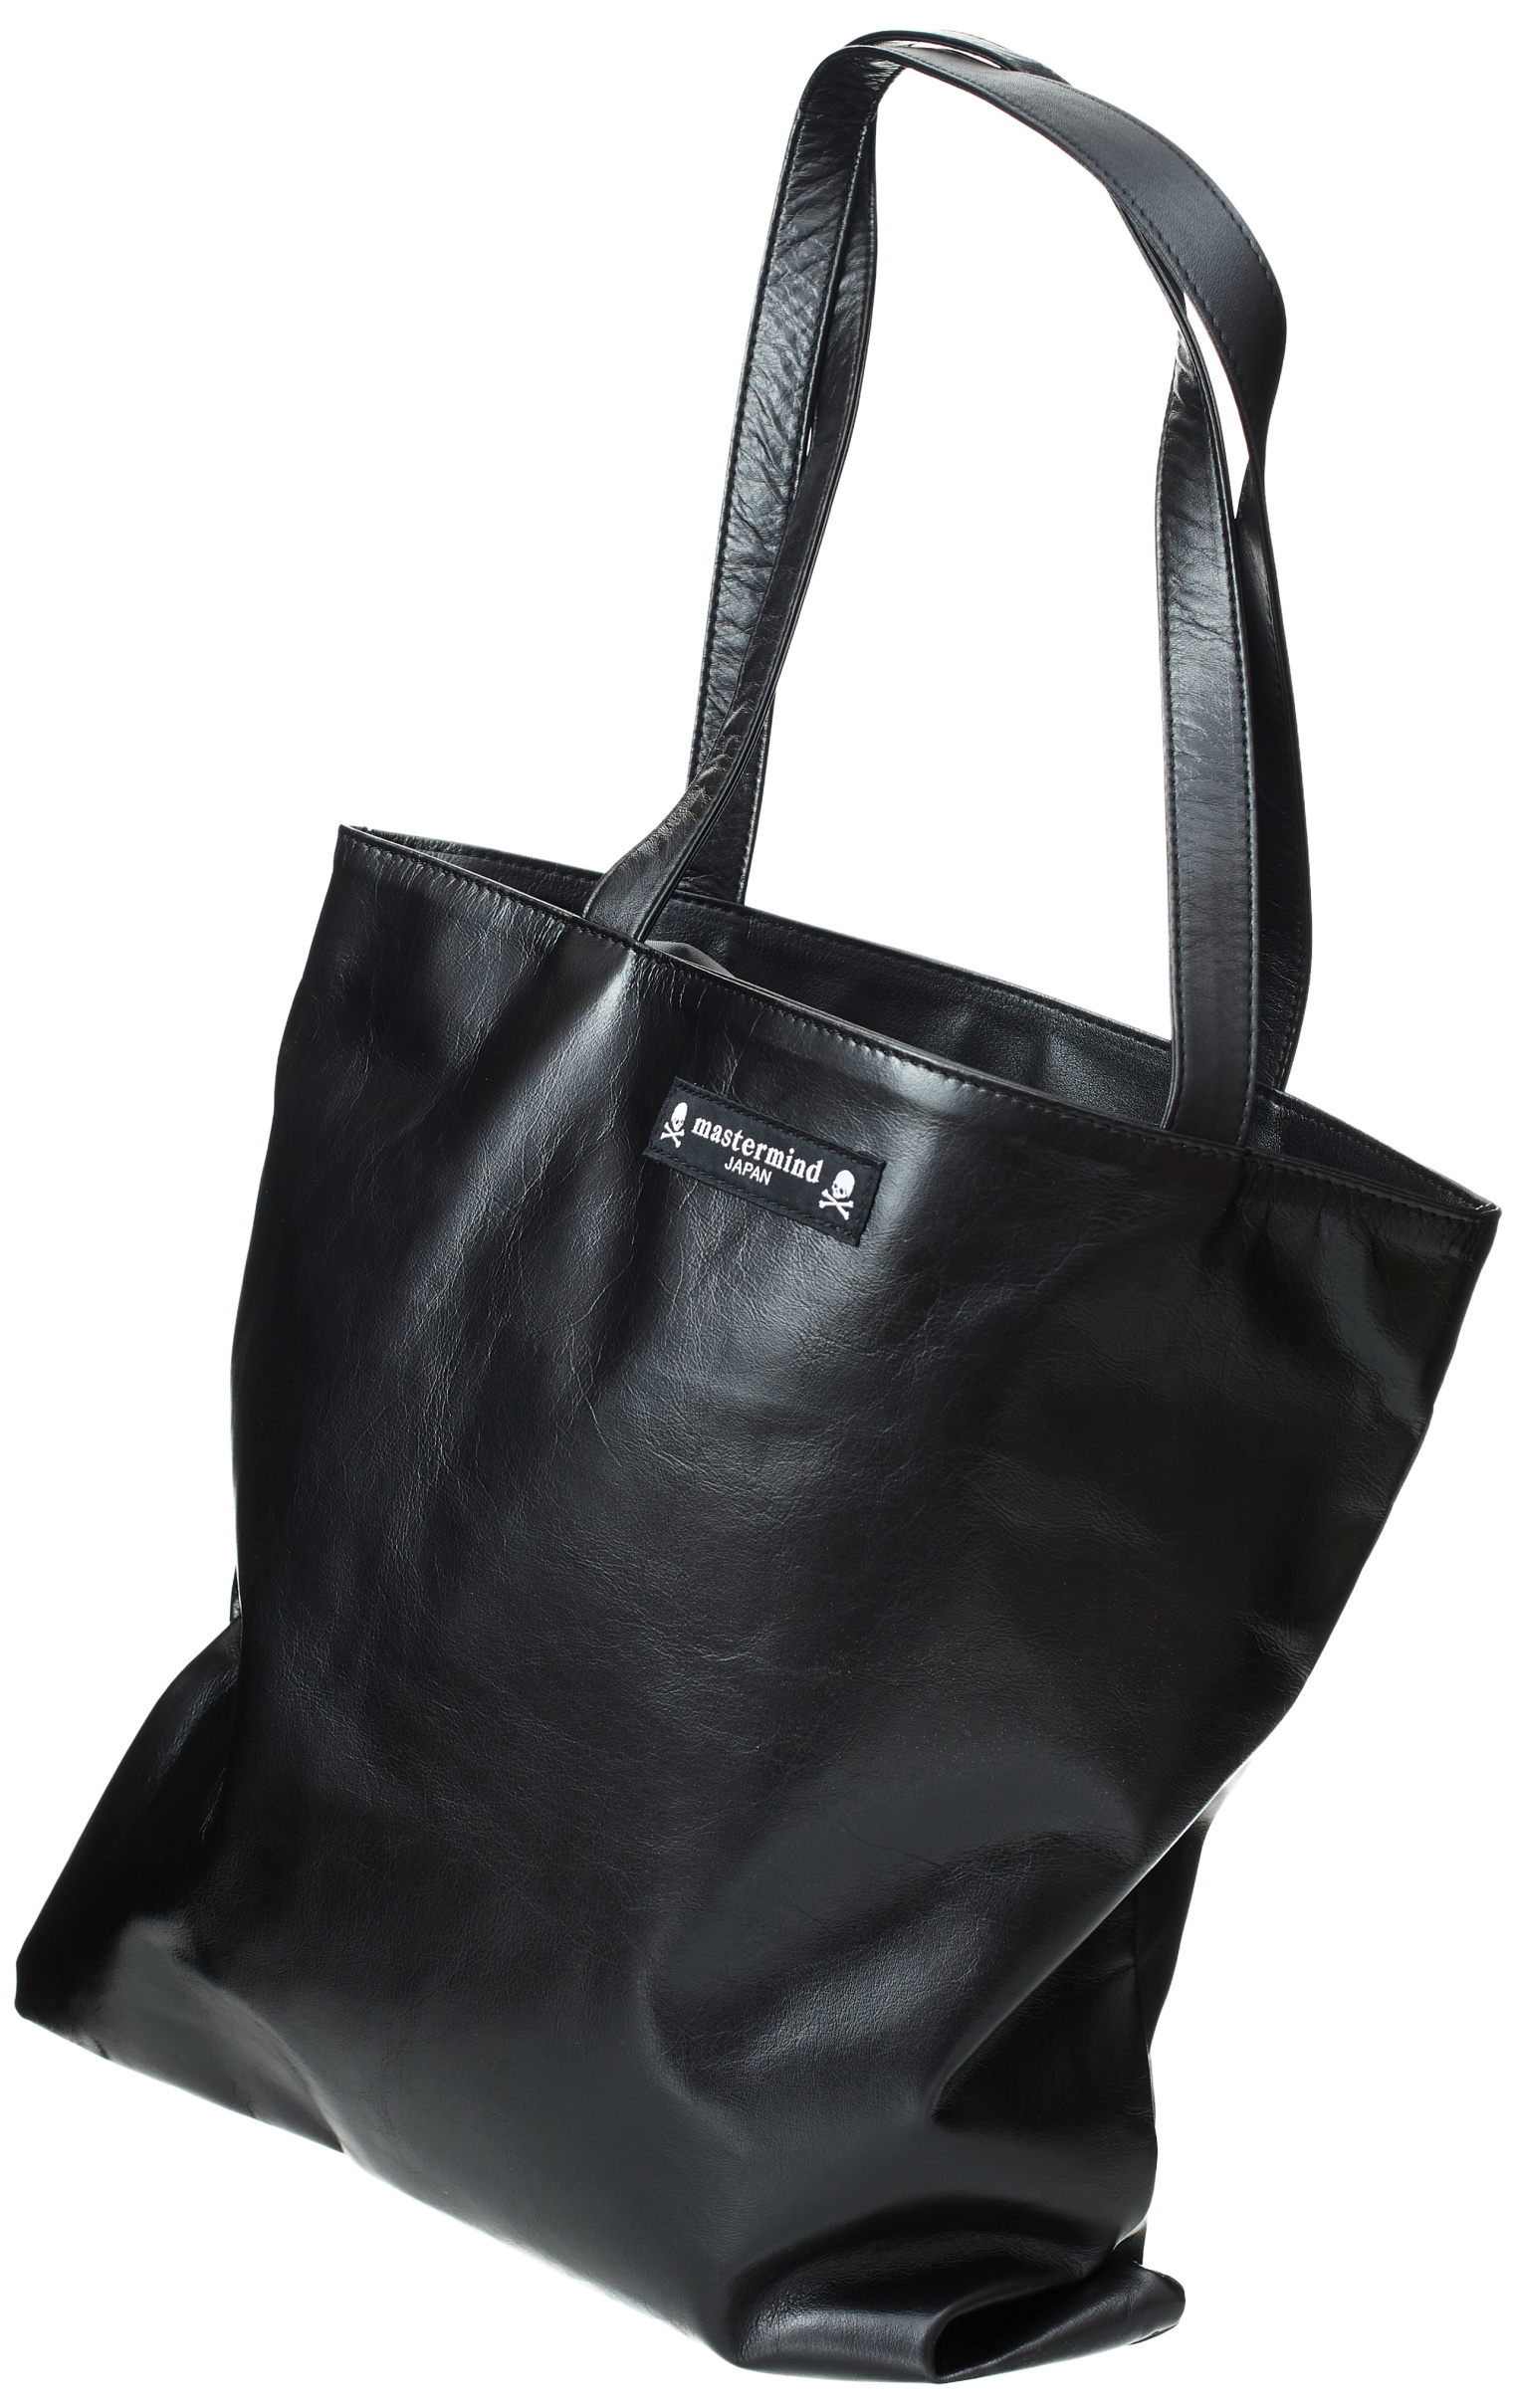 Mastermind WORLD Black leather tote bag